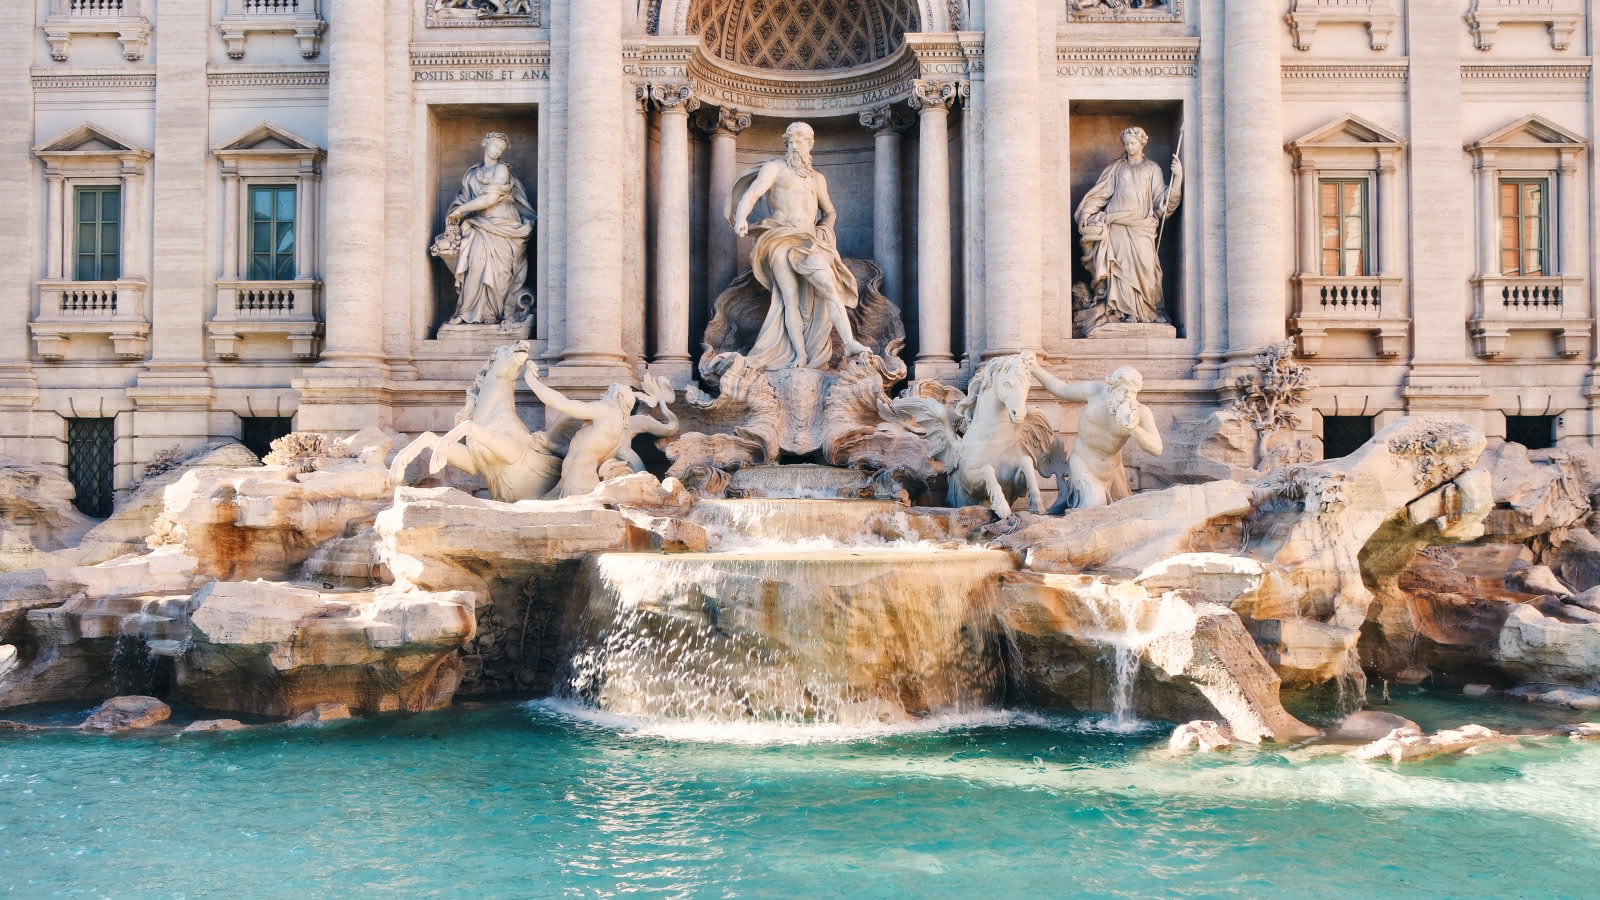 trevi fountain statues in rome